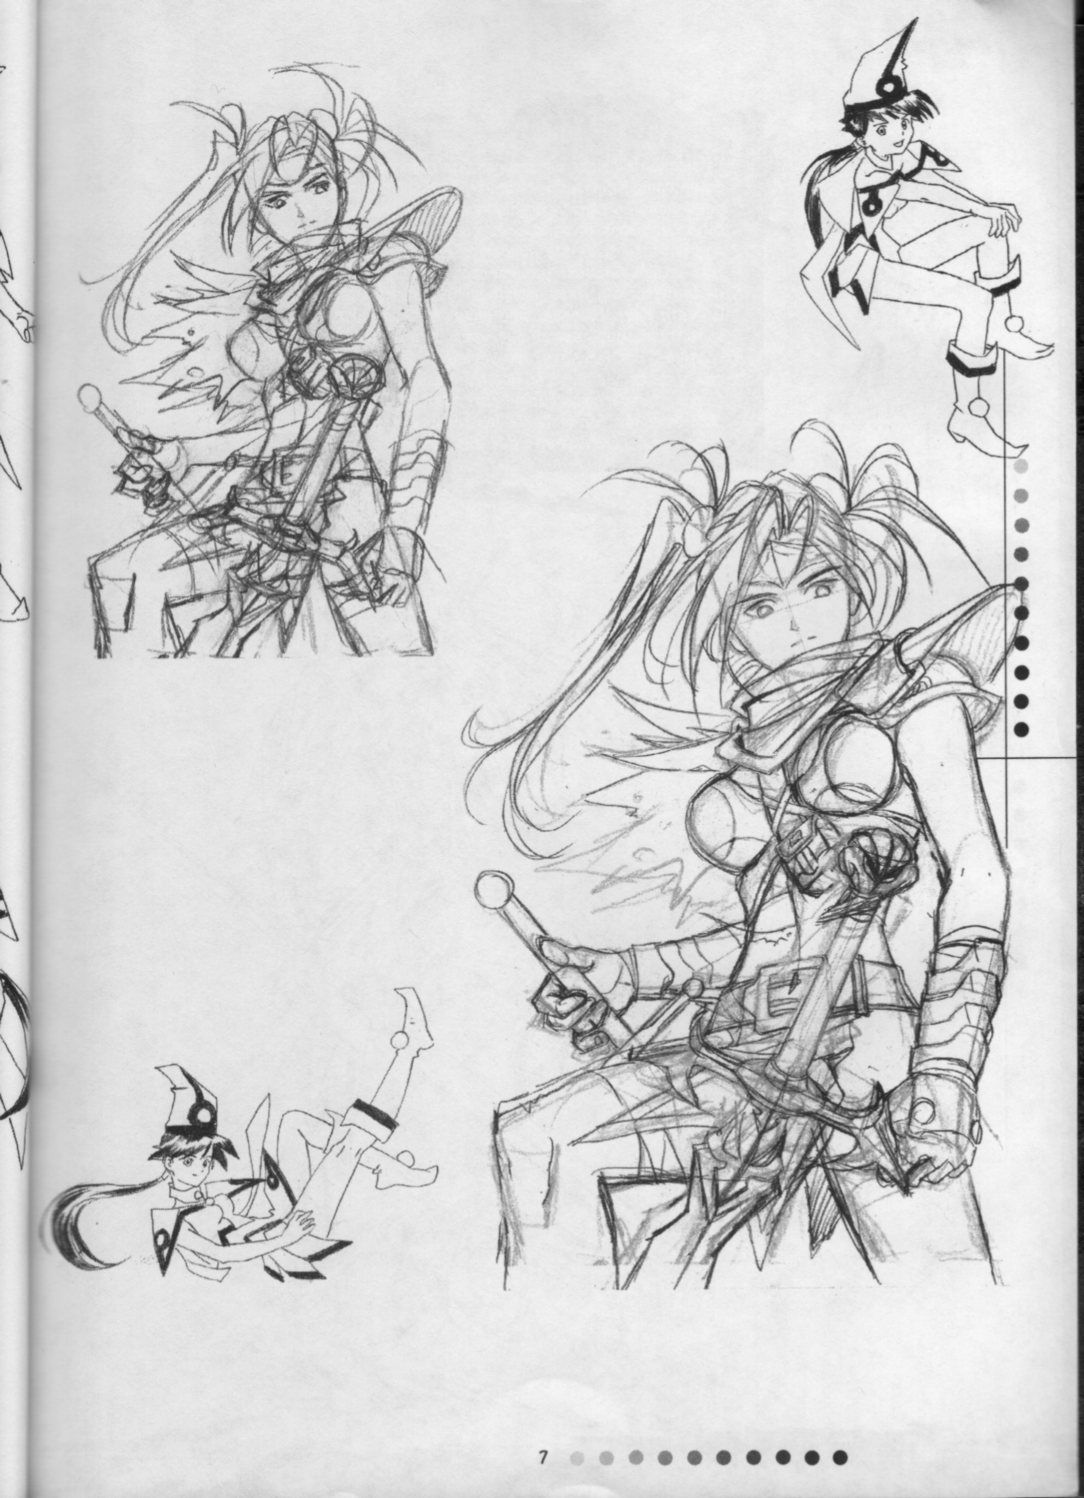 DibujArte Epecial Manga #18/20 - Armas armaduras y Personajes fantasticos [Spanish] 6